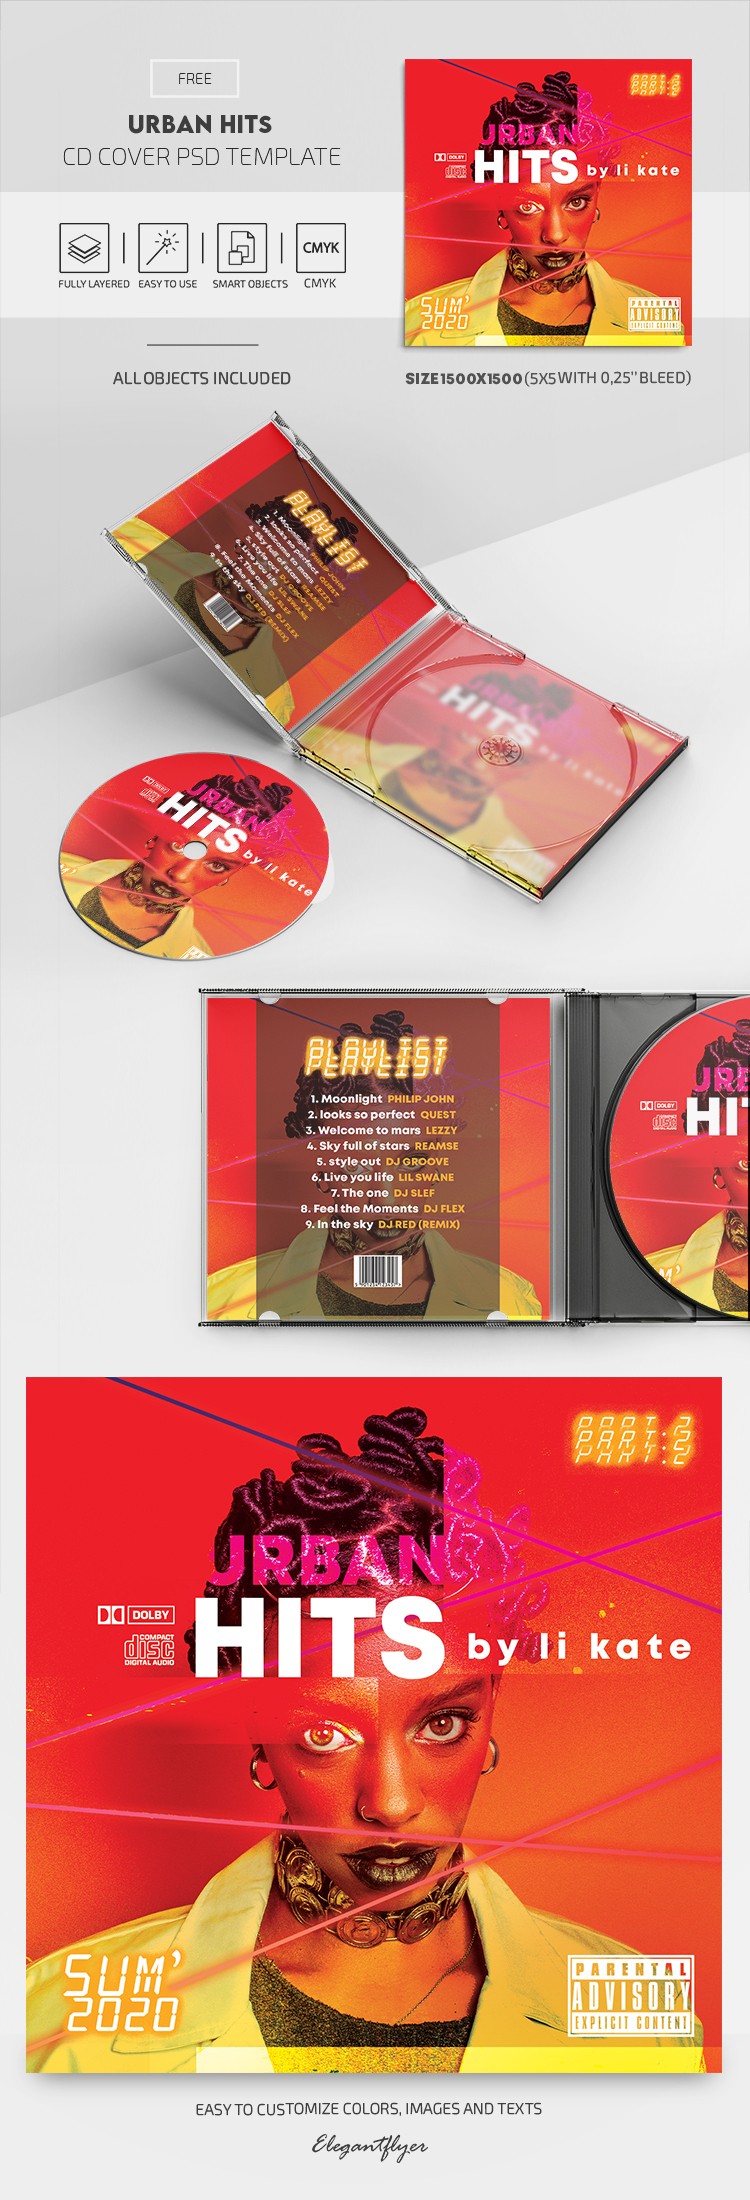 Portada del CD Urban Hits by ElegantFlyer